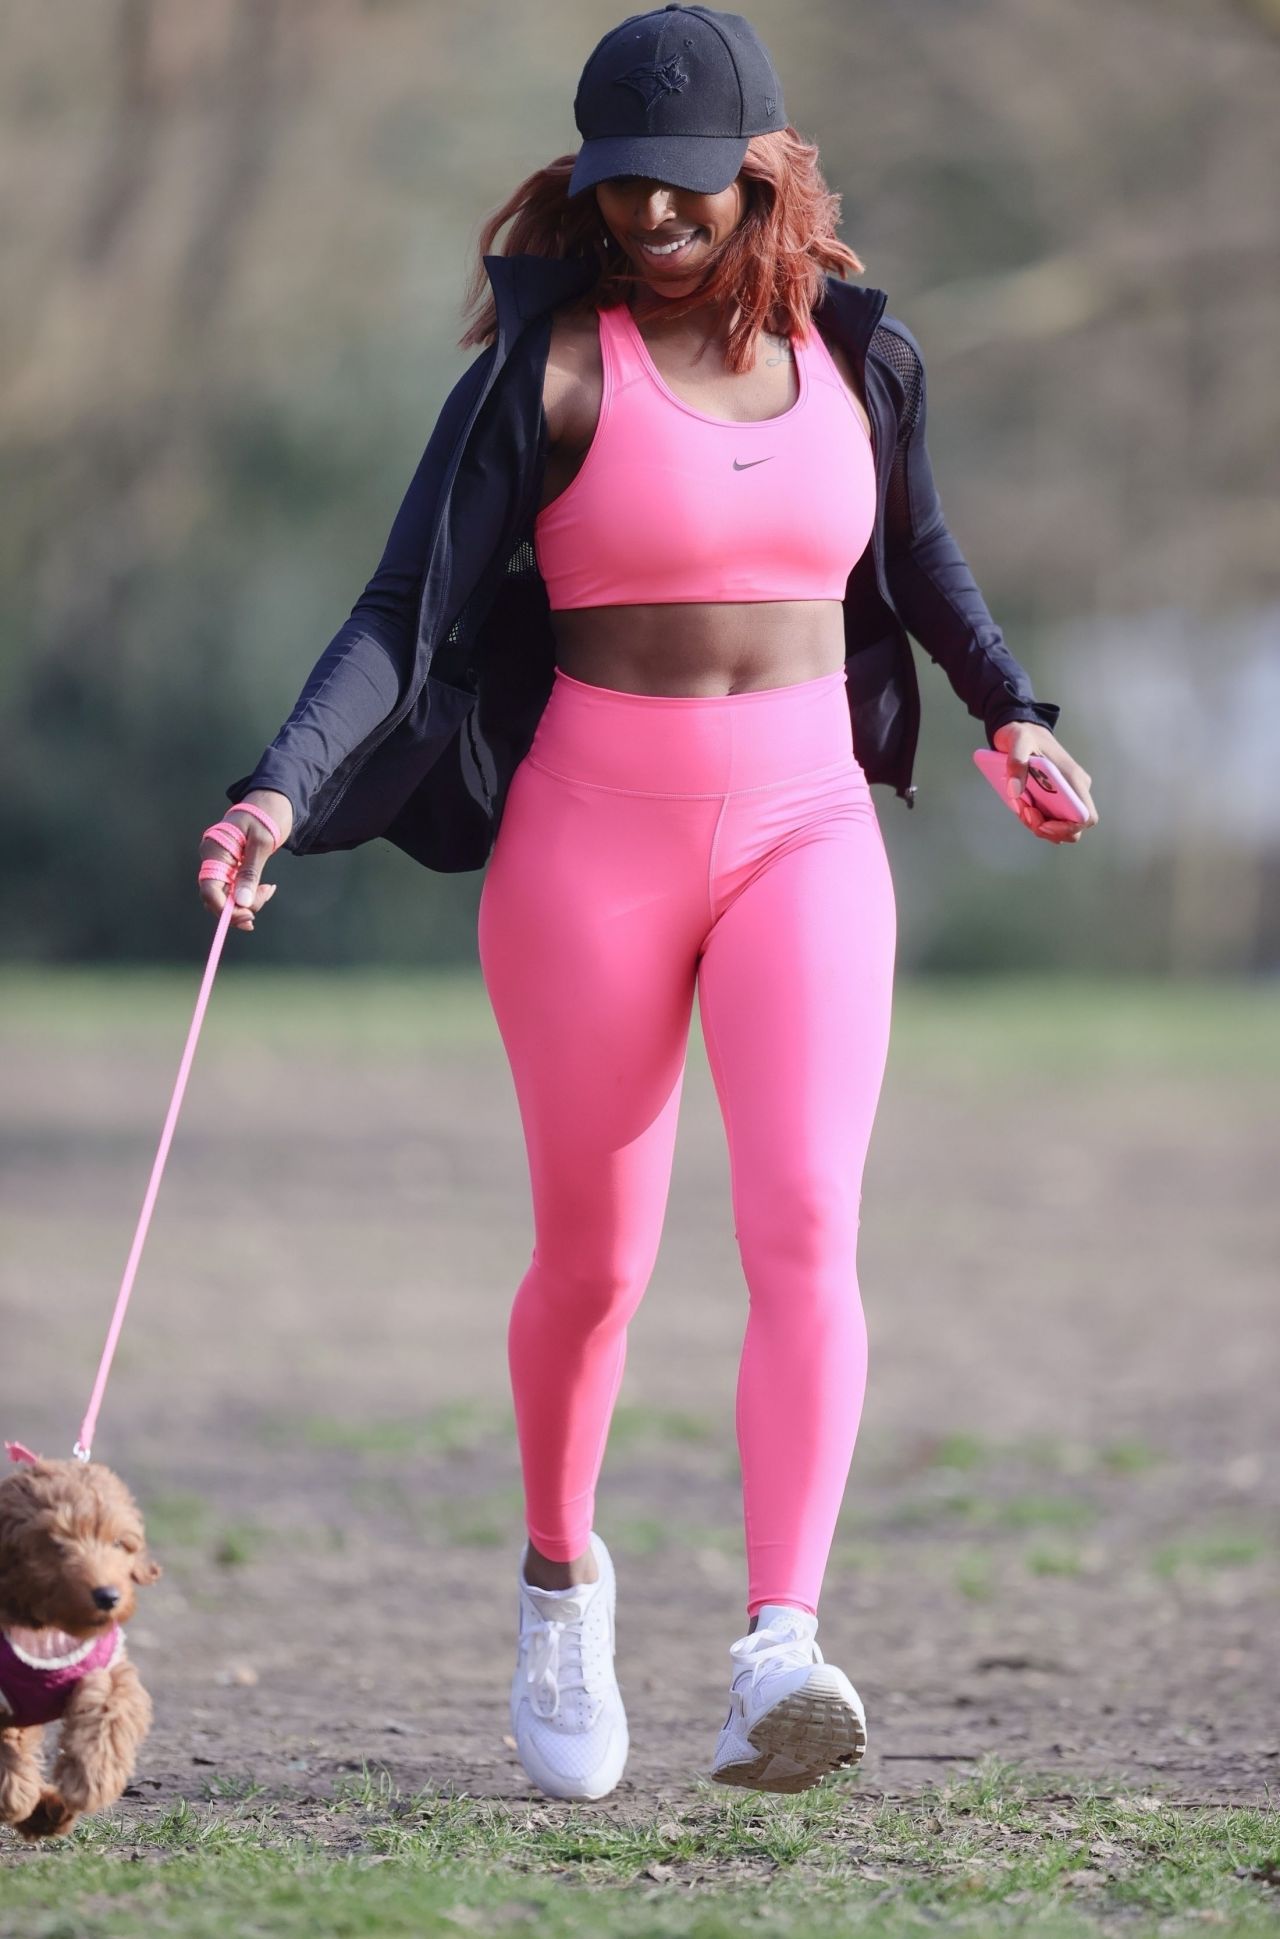 https://celebmafia.com/wp-content/uploads/2021/03/alexandra-burke-in-pink-lycra-leggings-north-london-03-10-2021-9.jpg